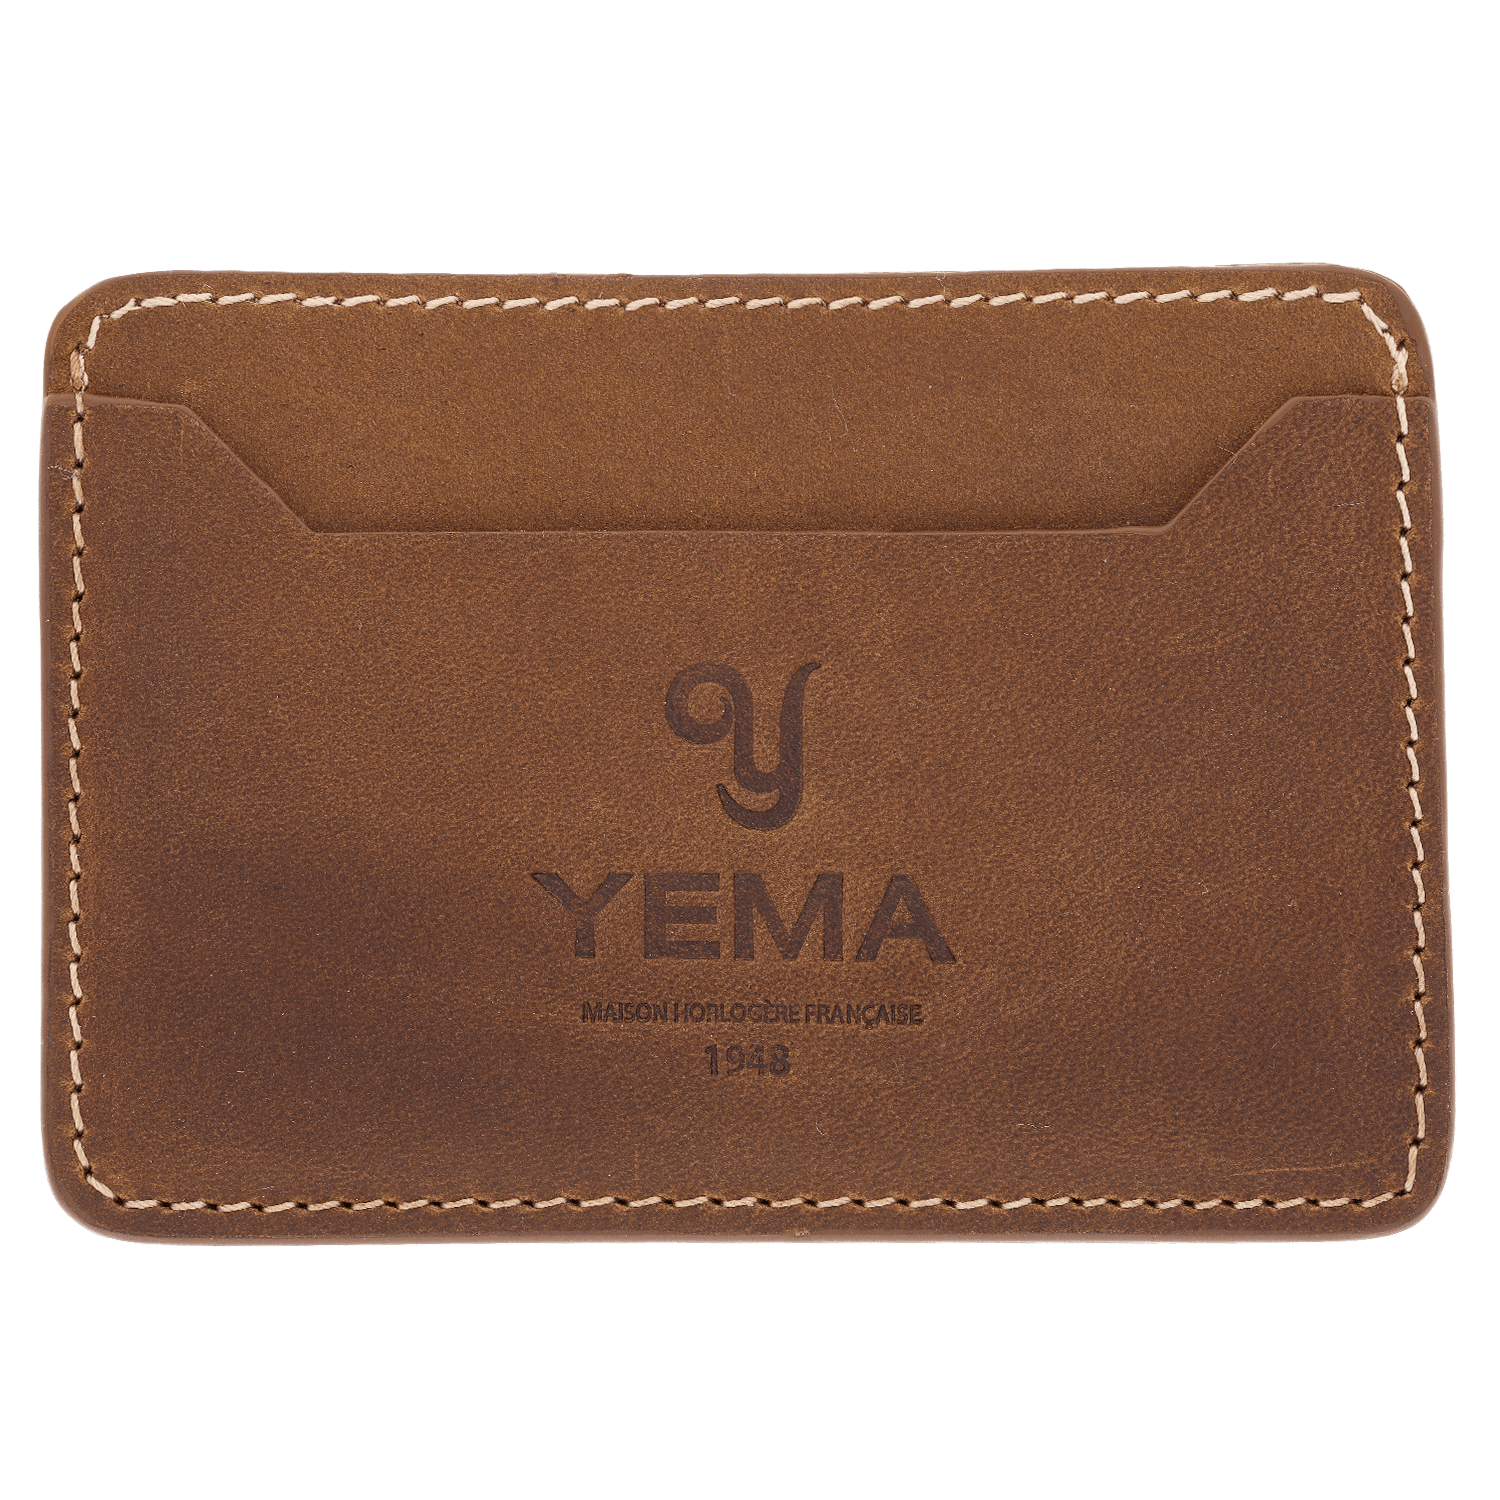 YEMA Card Holder